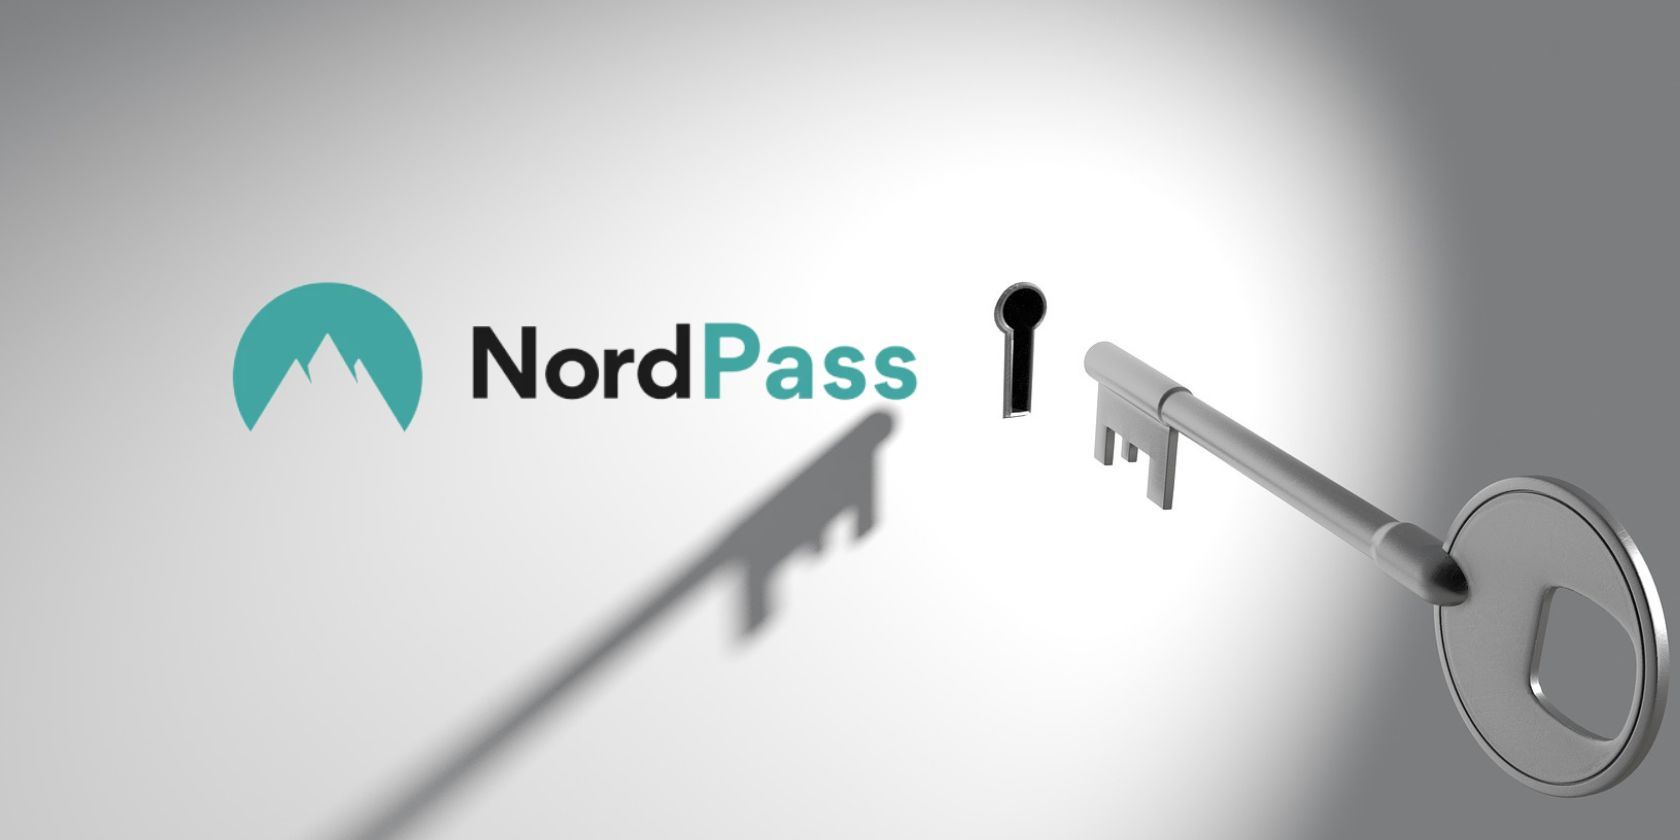 key going into keyhole next to nordpass logo